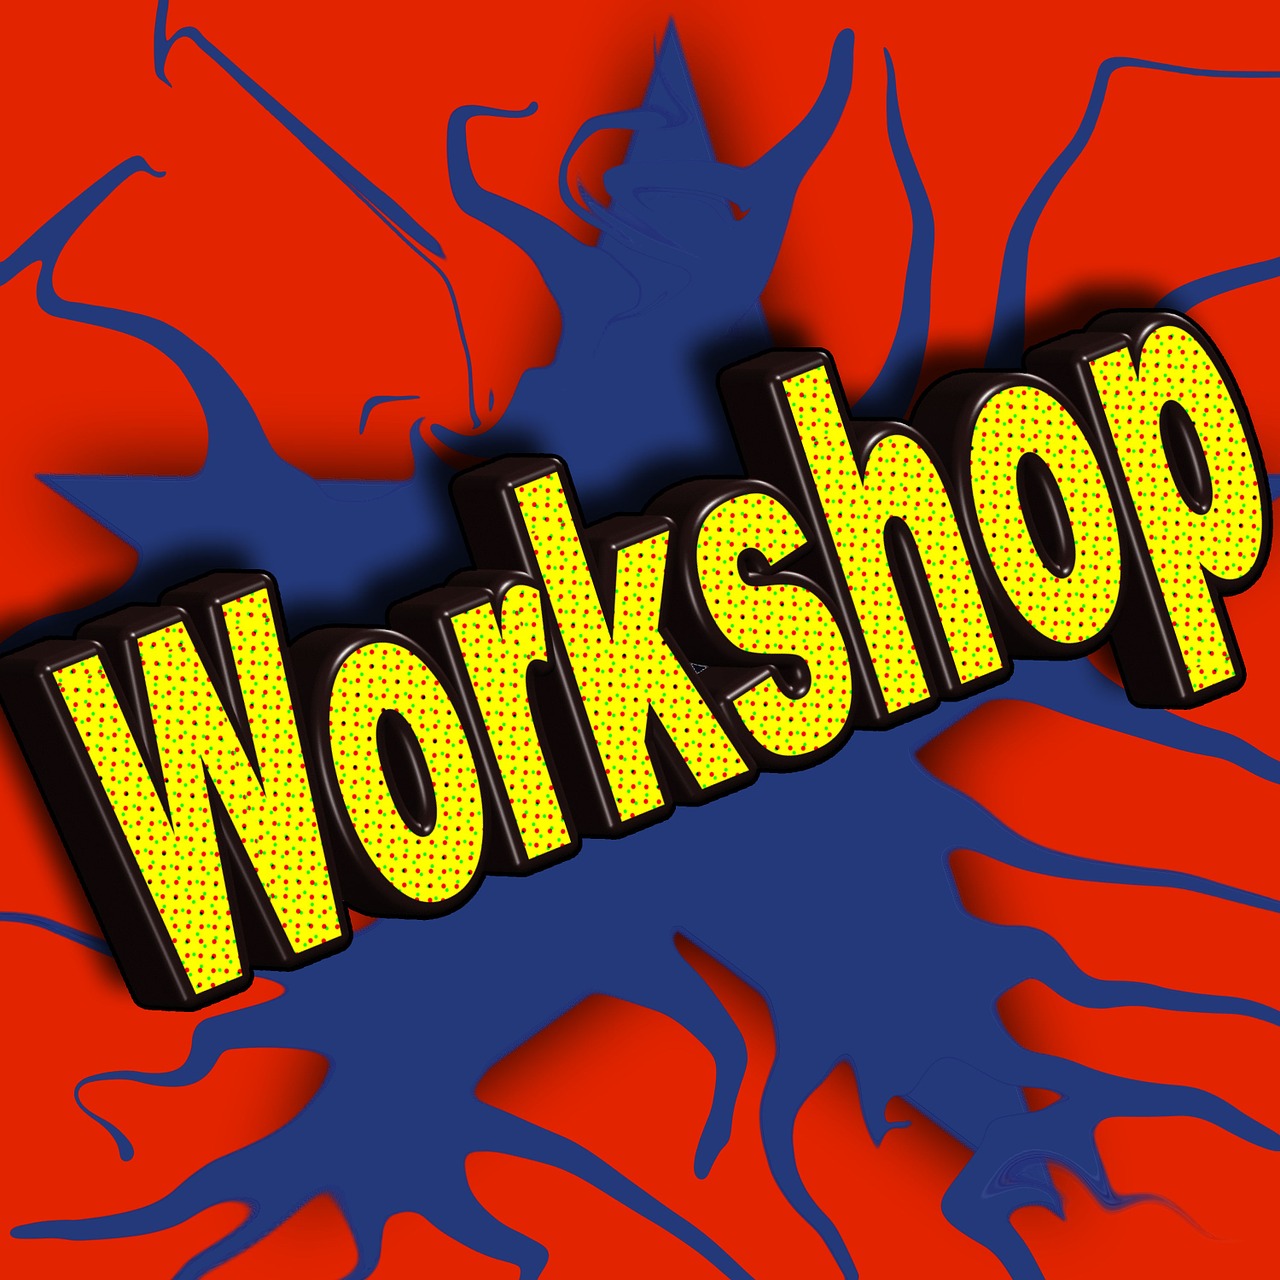 workshop training seminar free photo